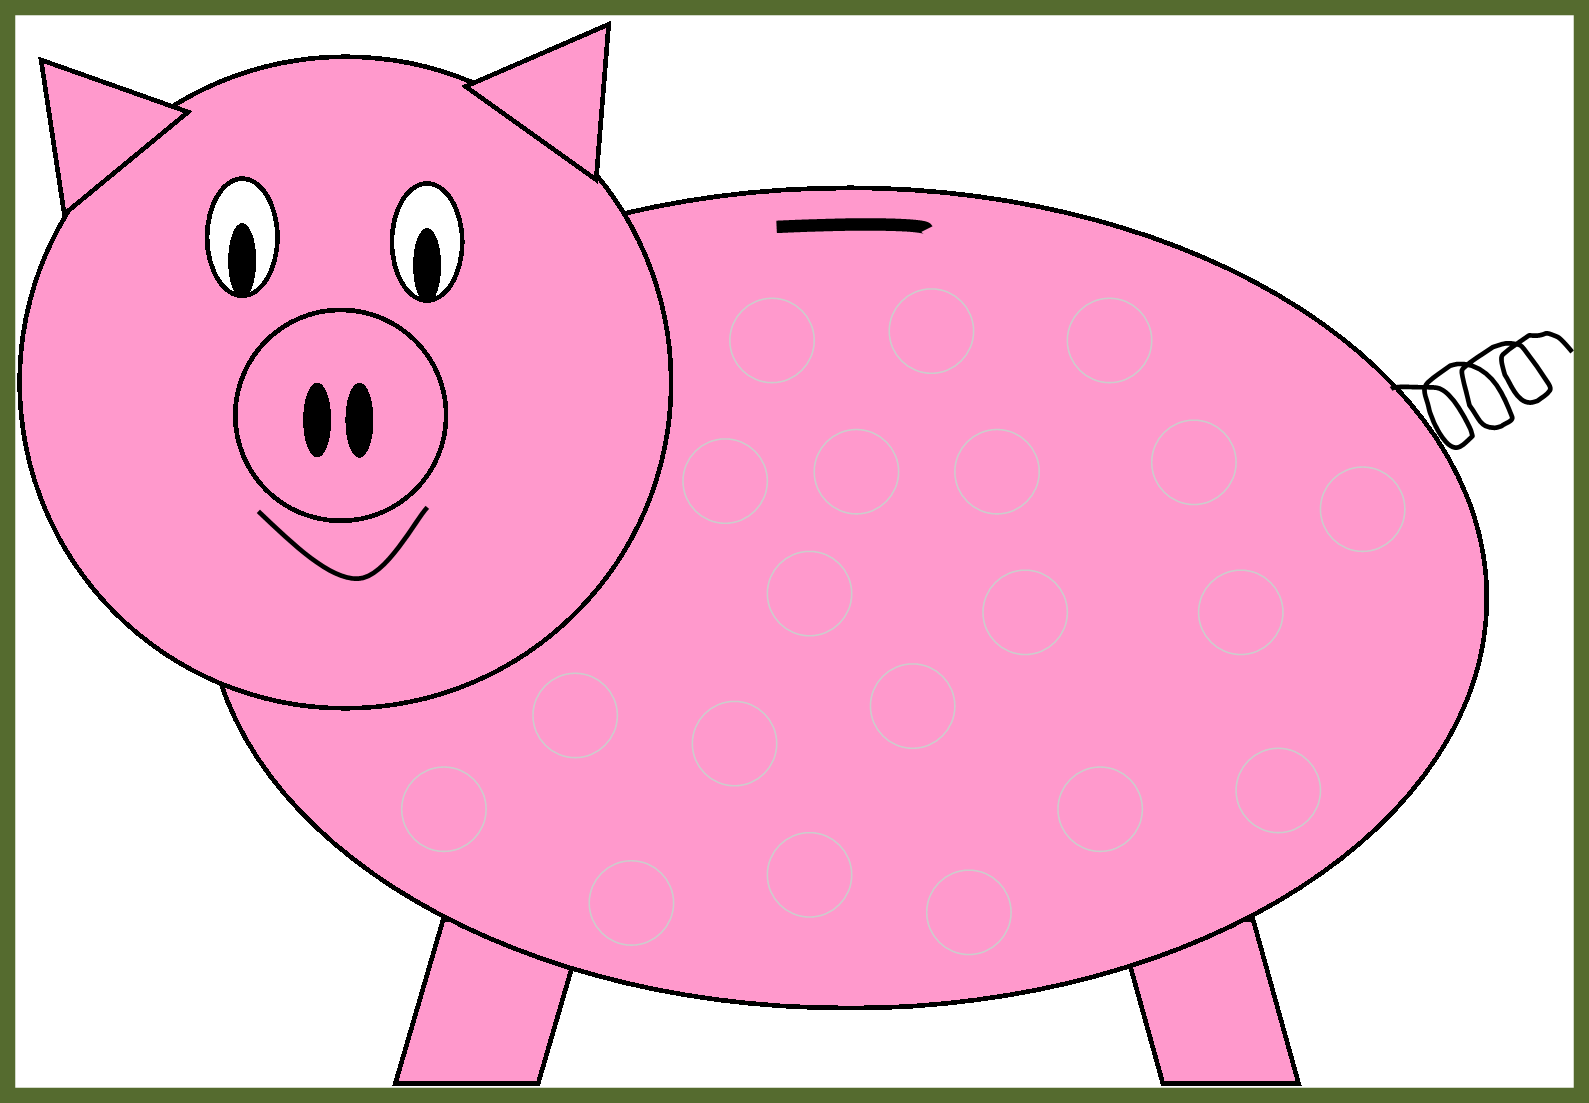 clipart pig bank